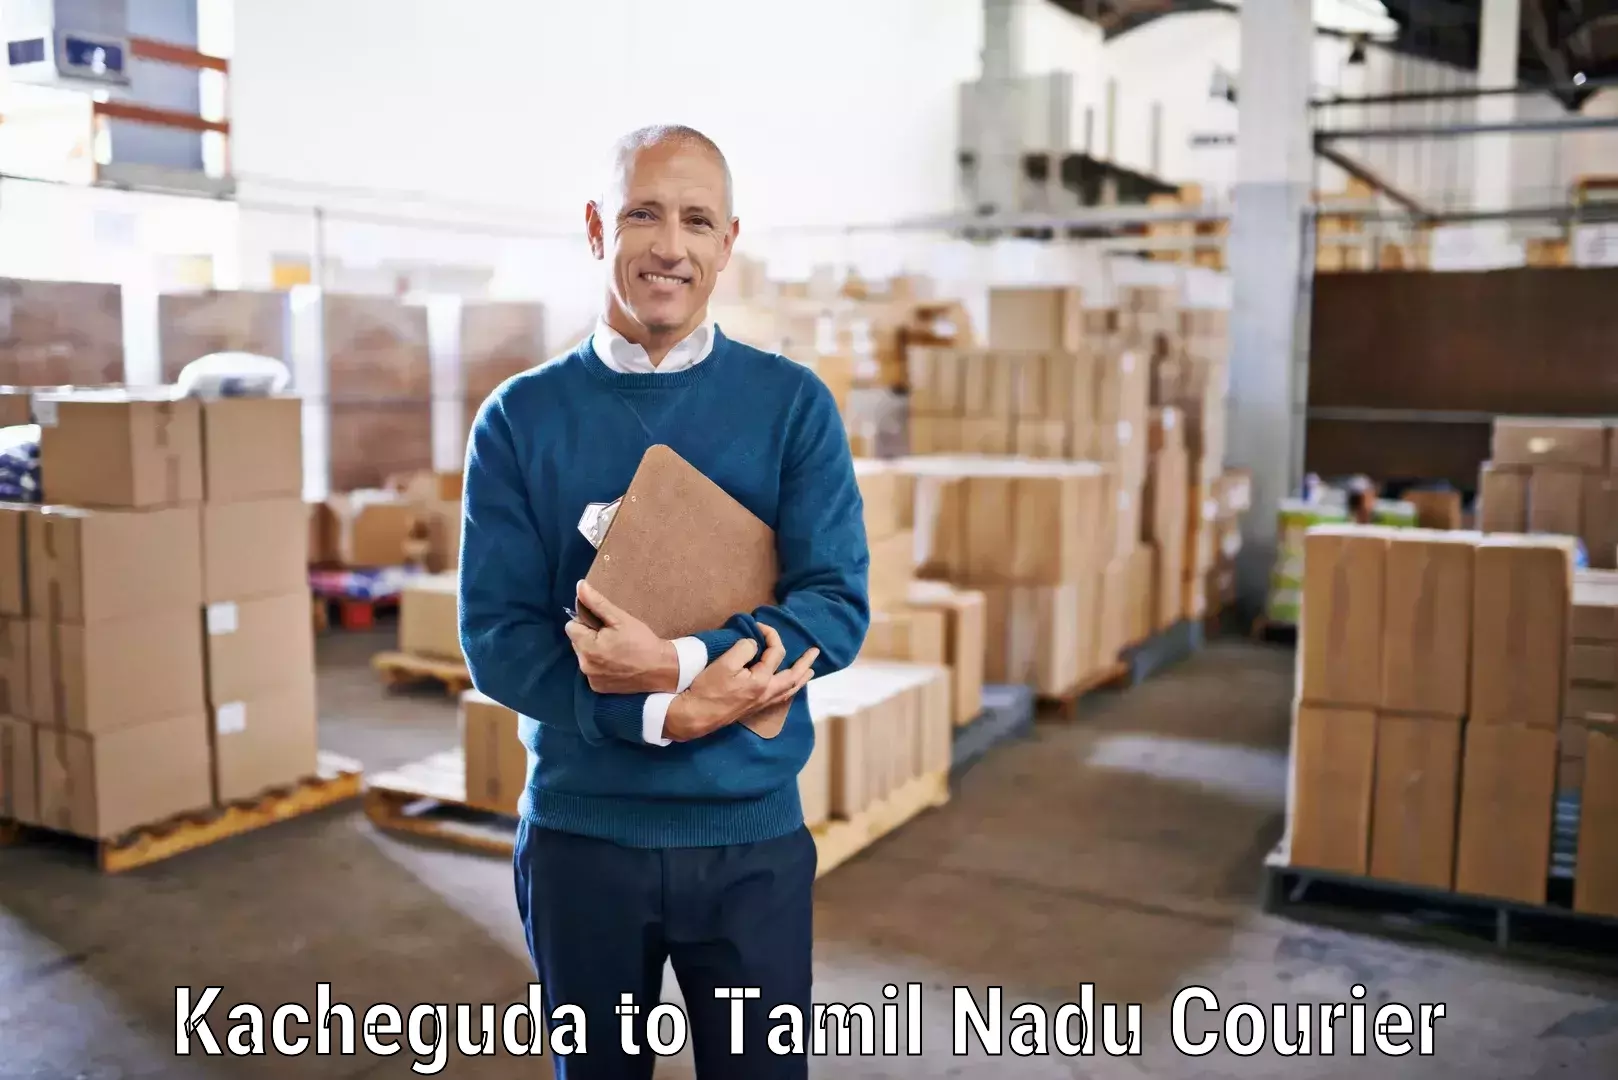 Secure shipping methods Kacheguda to Madurai